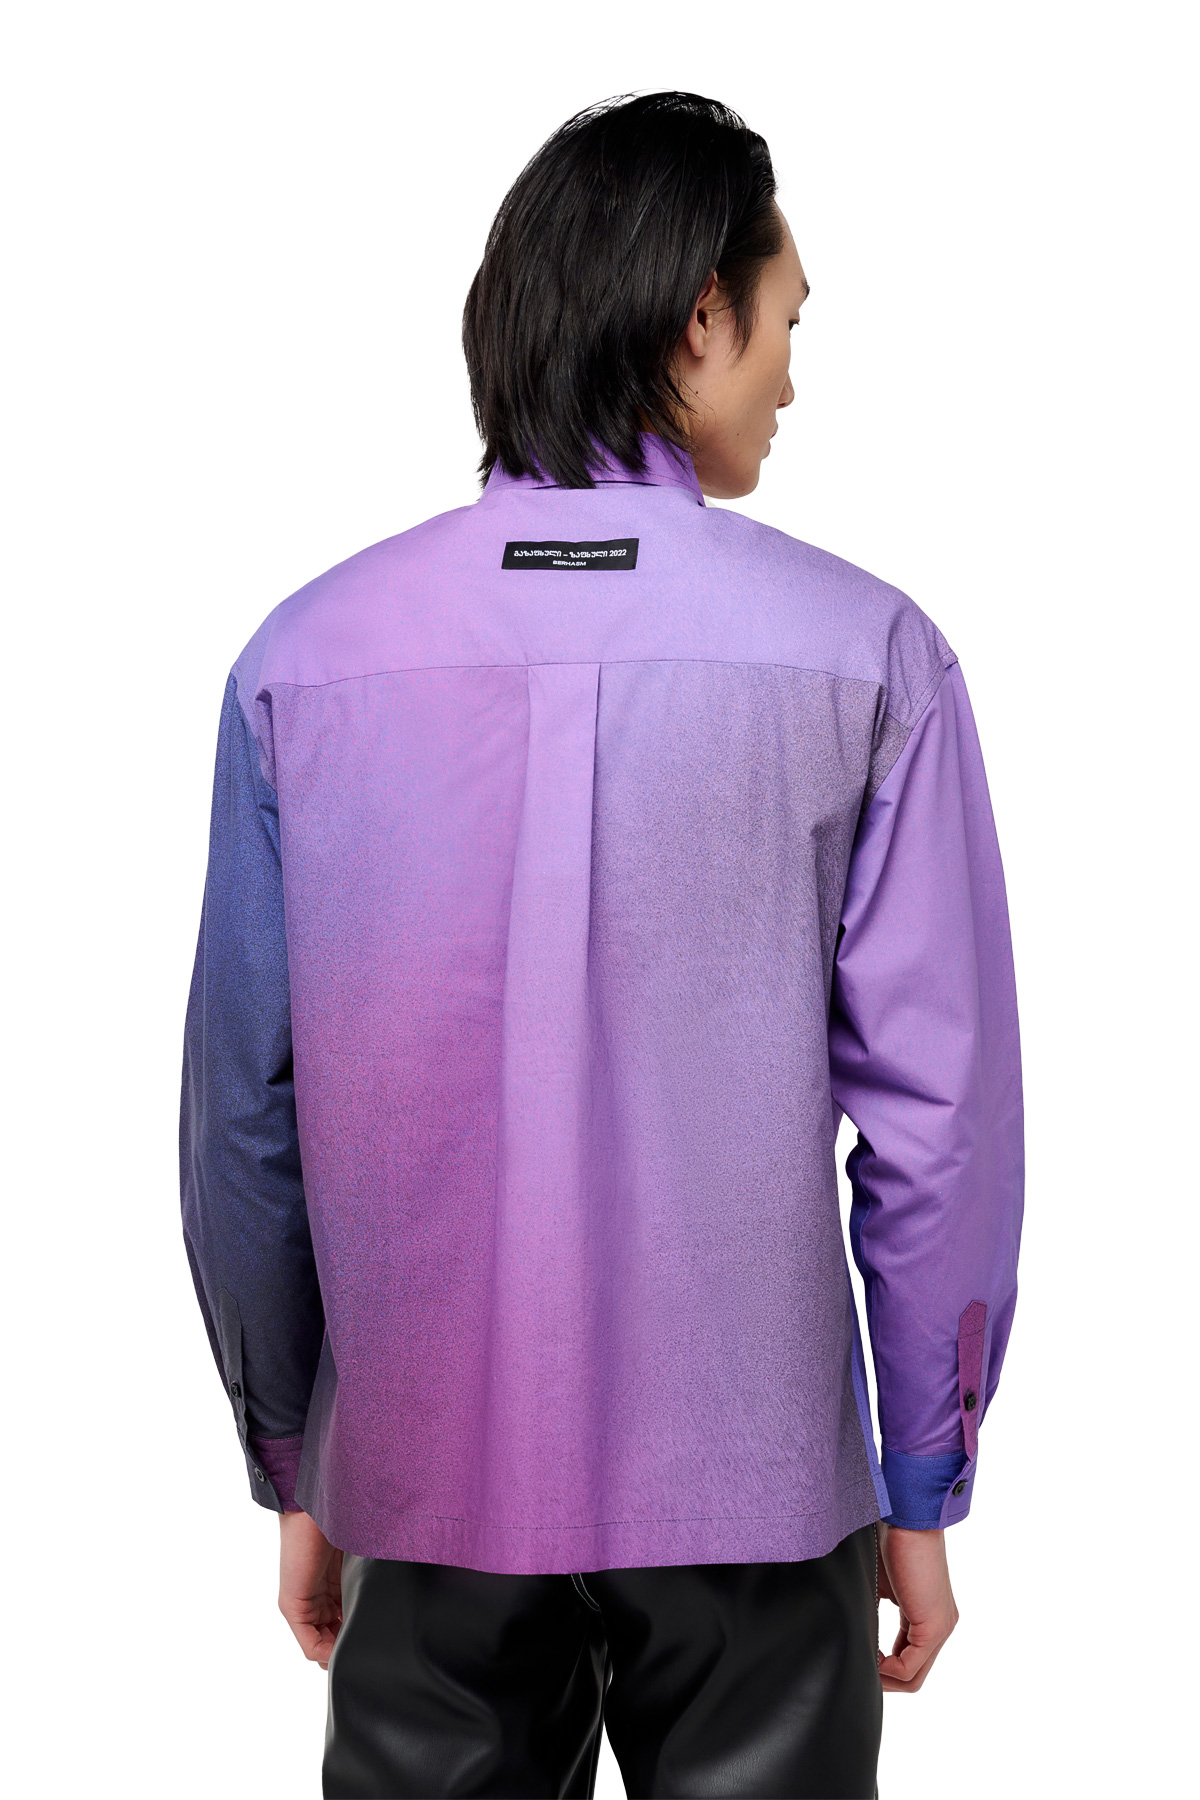 Berhasm shirt Purple twilight